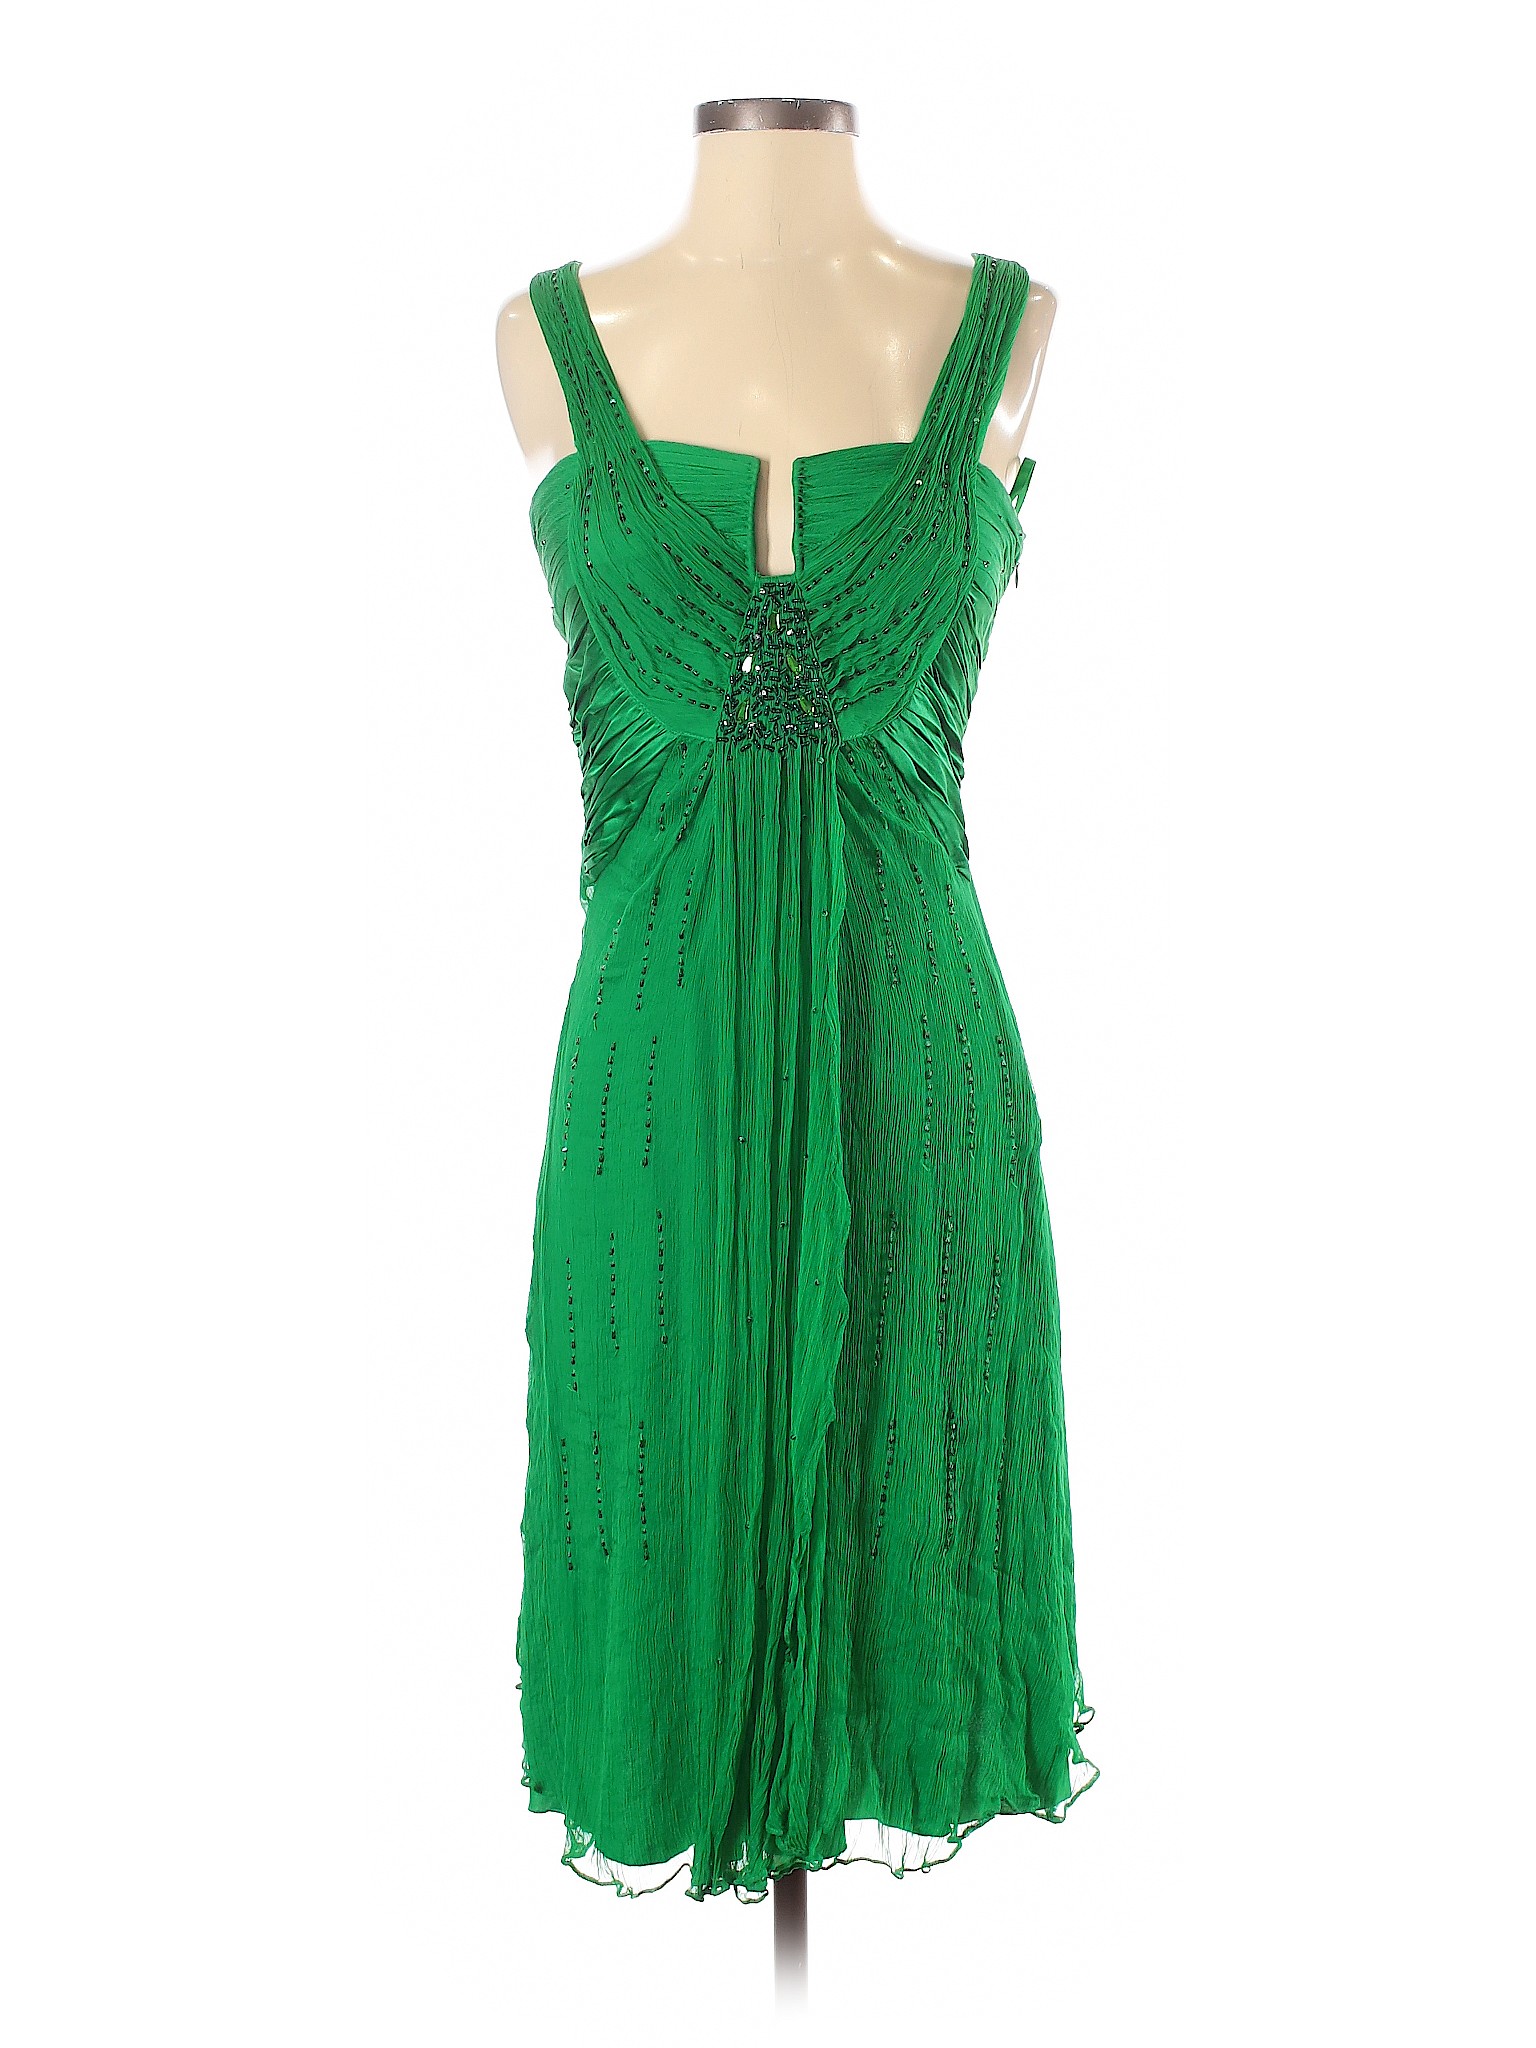 Nina Austin Women Green Cocktail Dress S | eBay